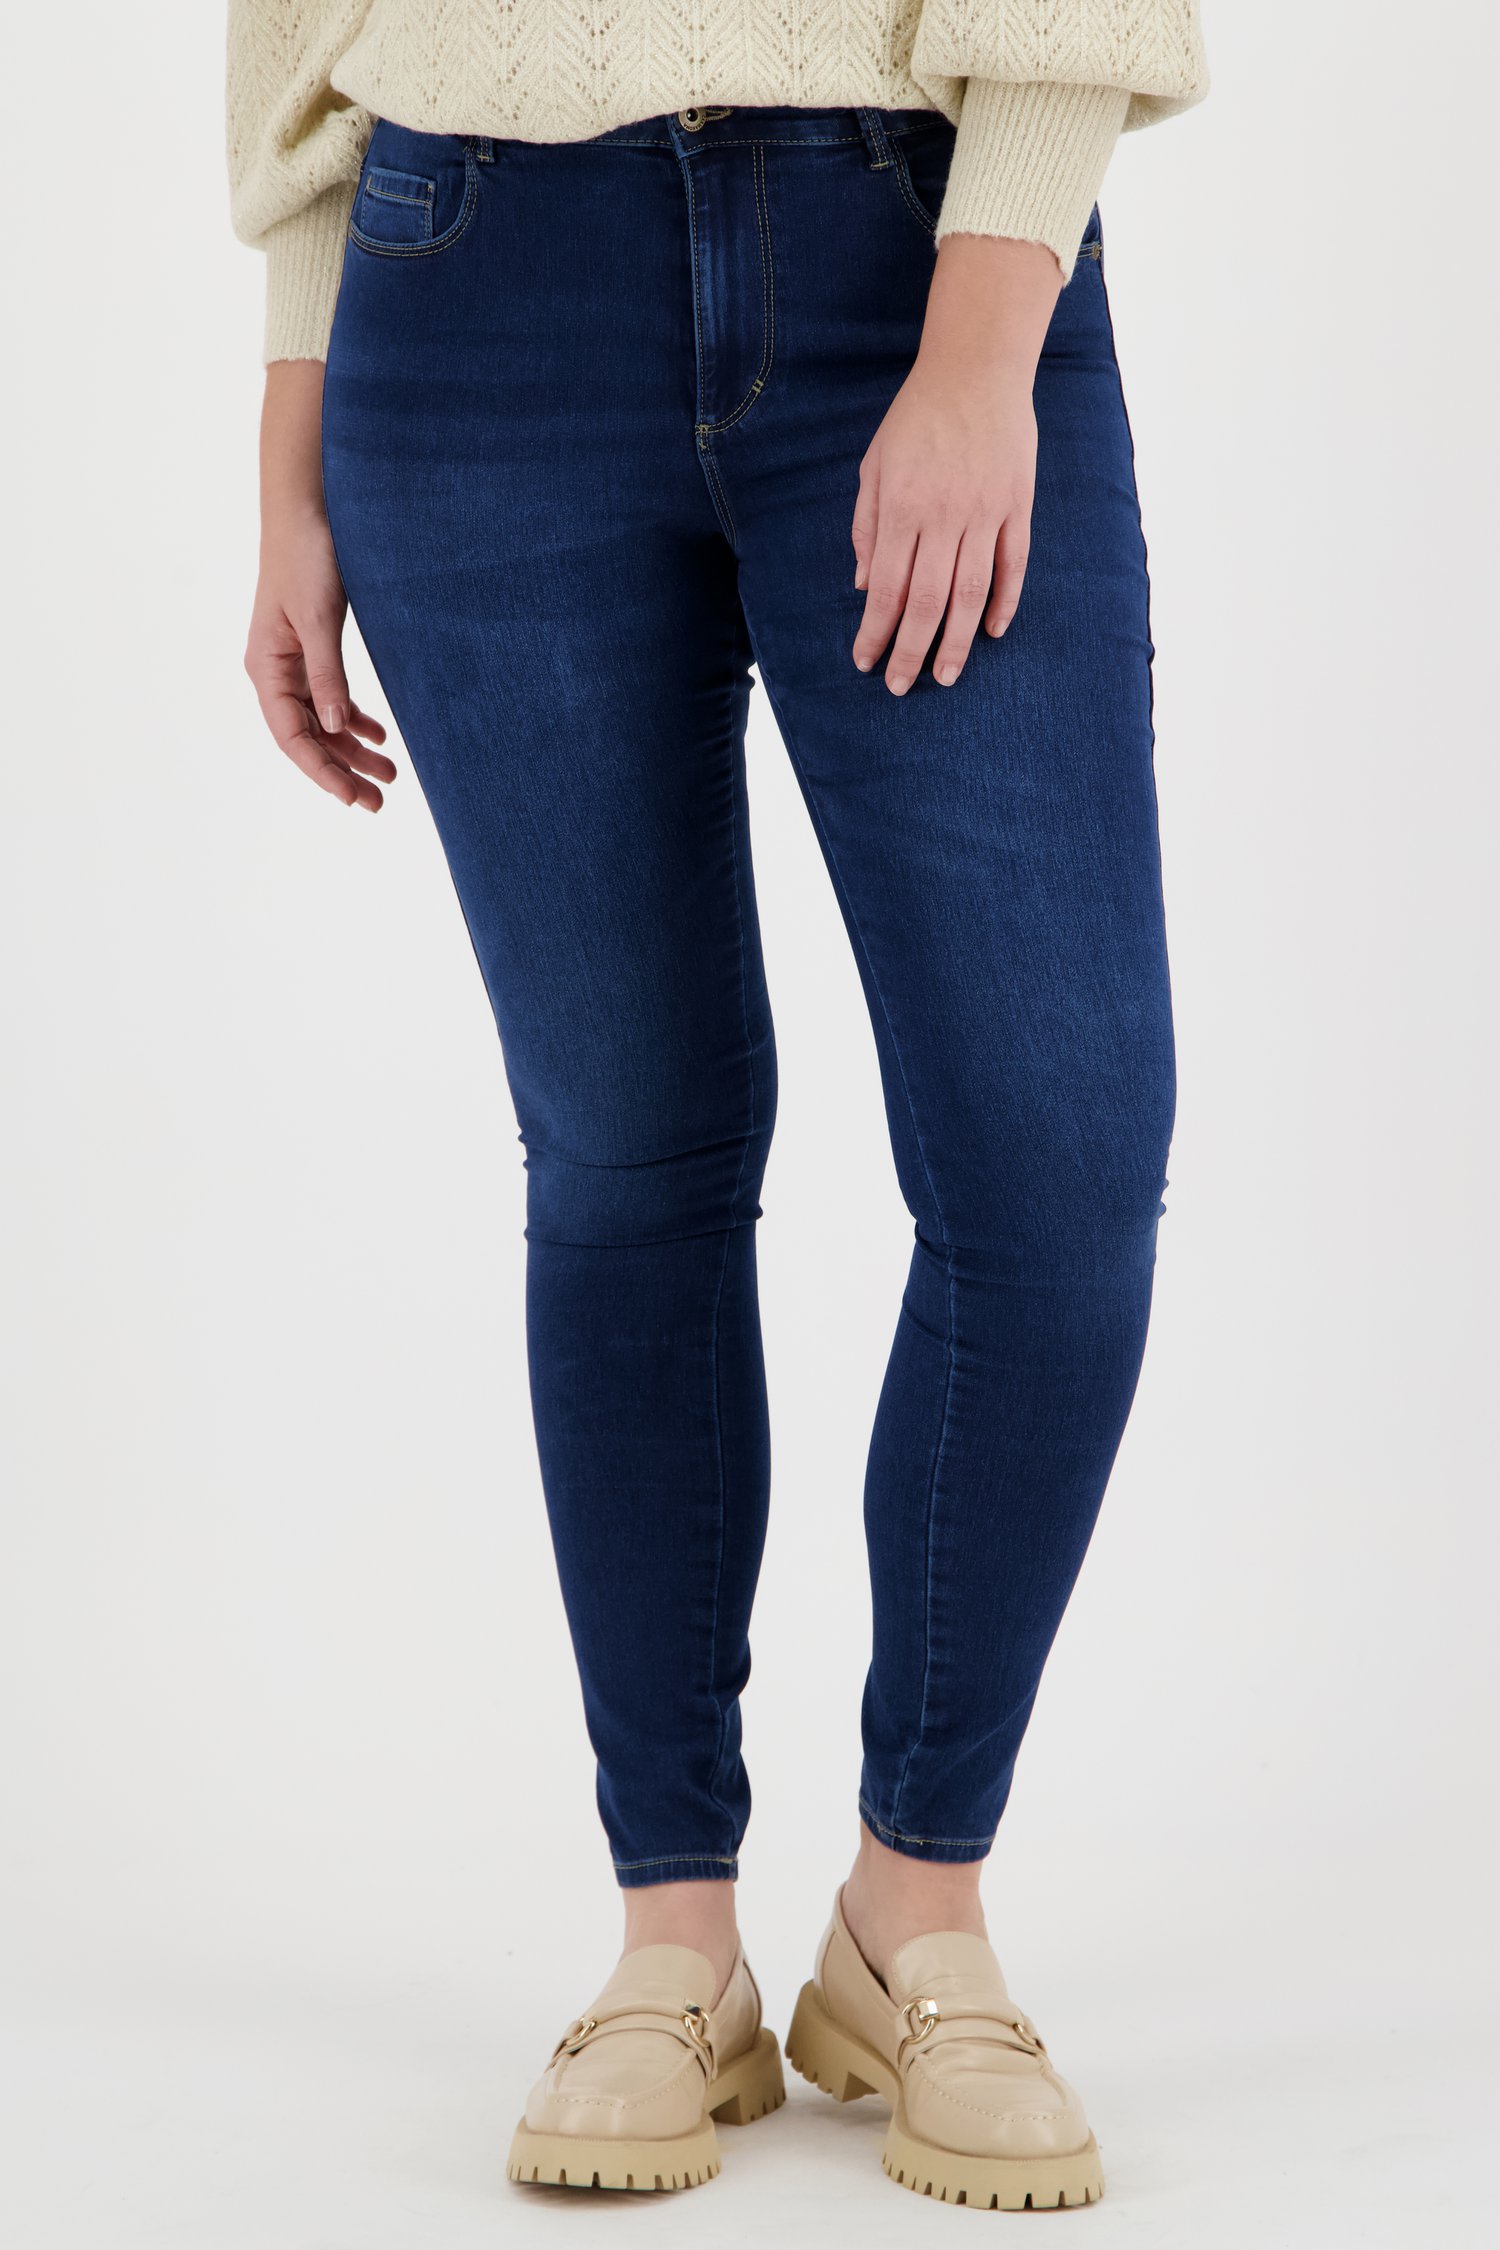 maagd Verrijking George Stevenson Blauwe jeans - skinny fit van Only Carmakoma | 9689286 | e5